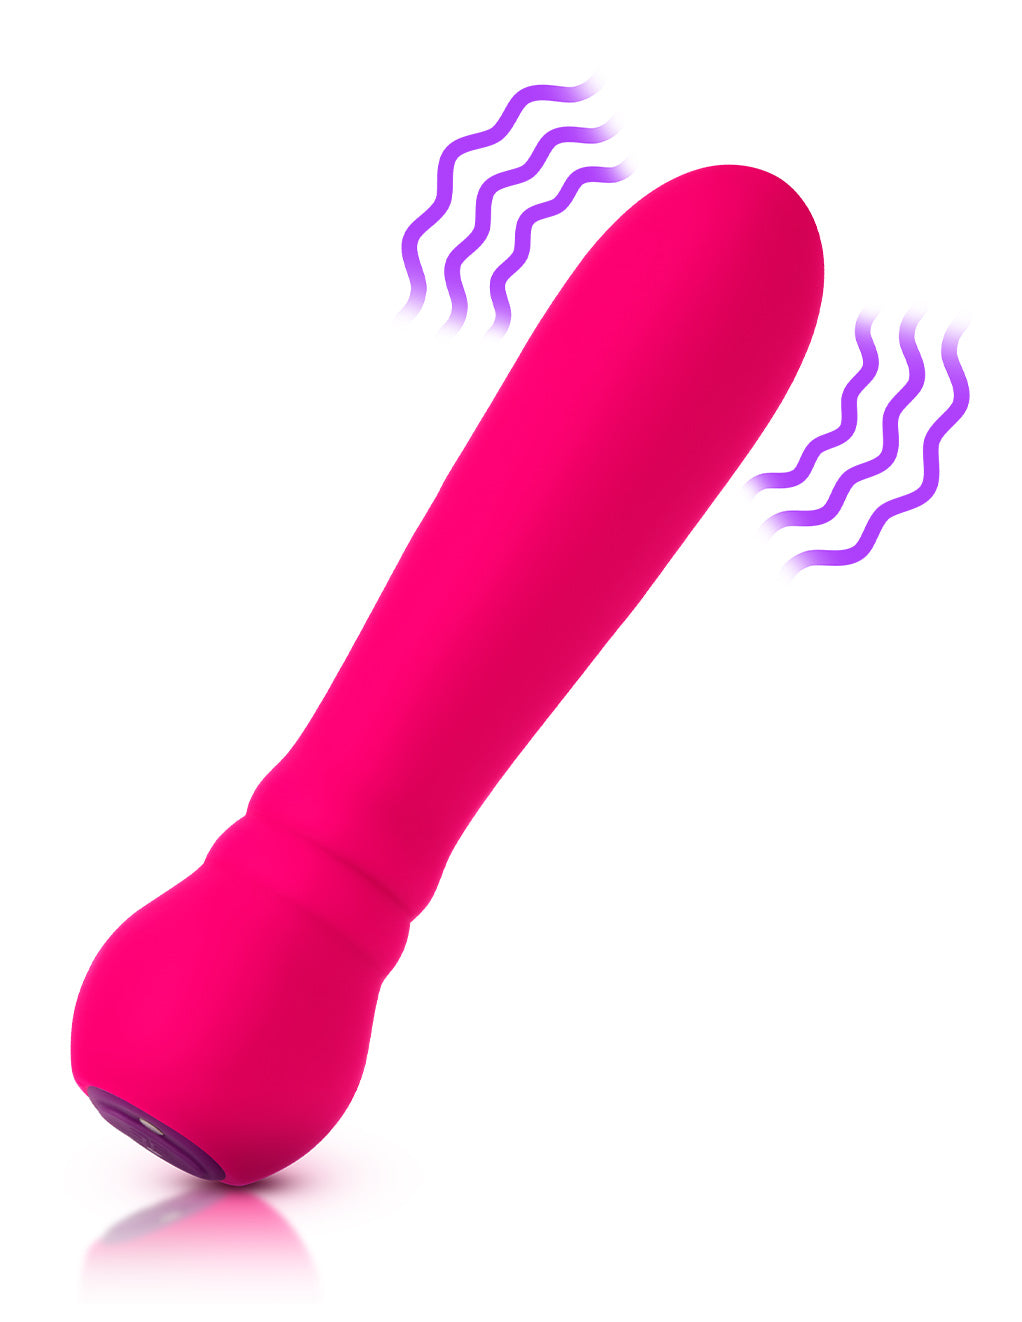 Femme Funn Ultra Bullet- Pink- Vibration Diagram